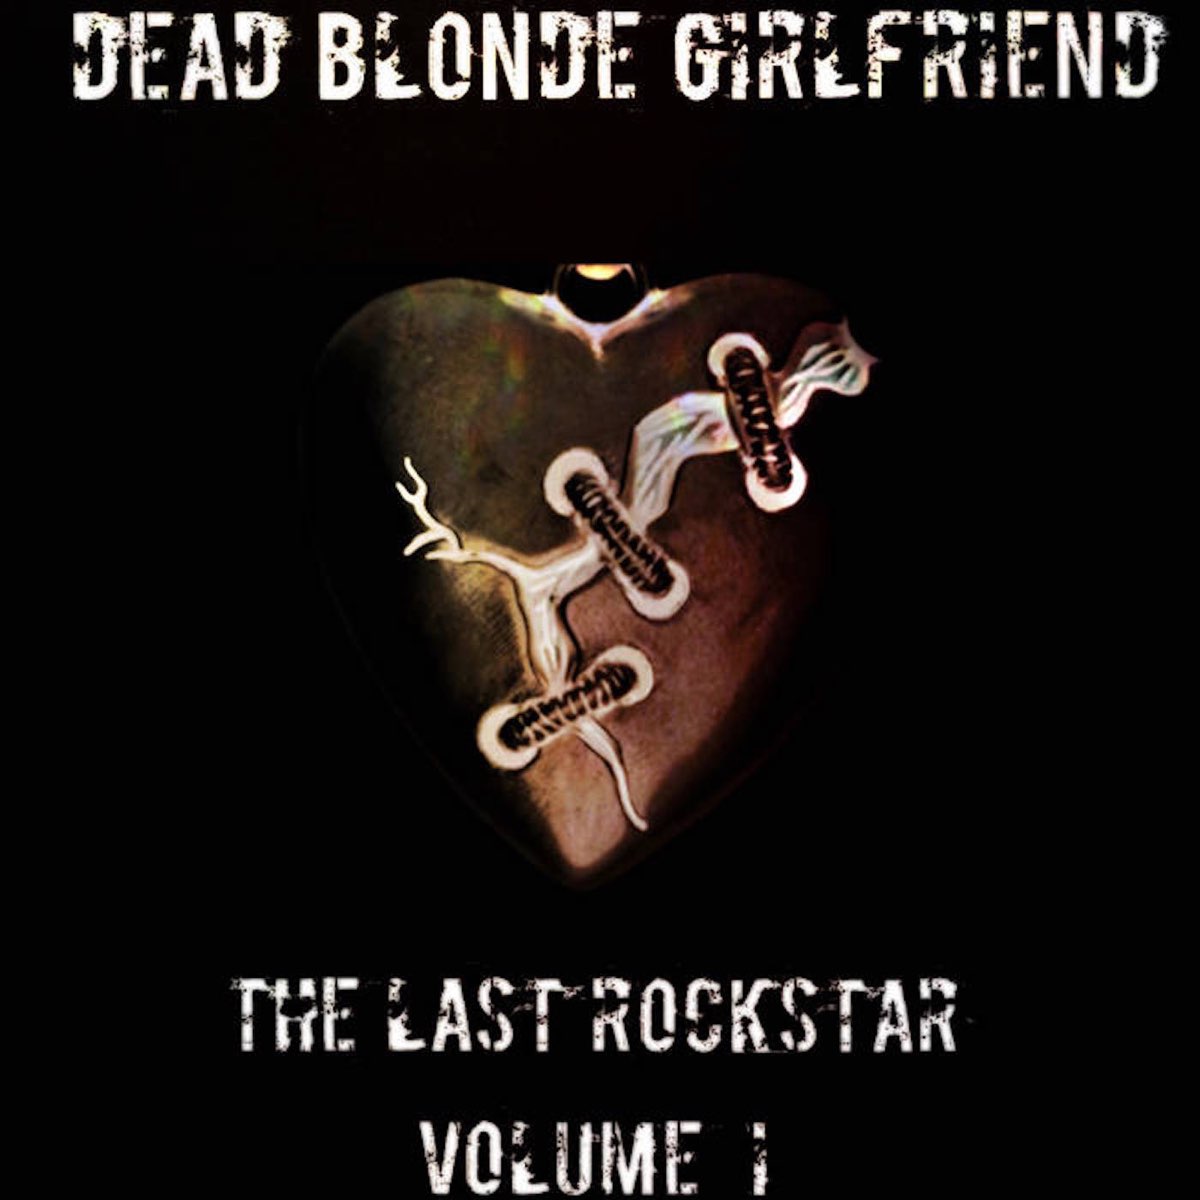 Dead blonde альбомы. Dead blonde. Dead blonde песни. Dead blonde обложка альбома. Dead blonde лейбл.